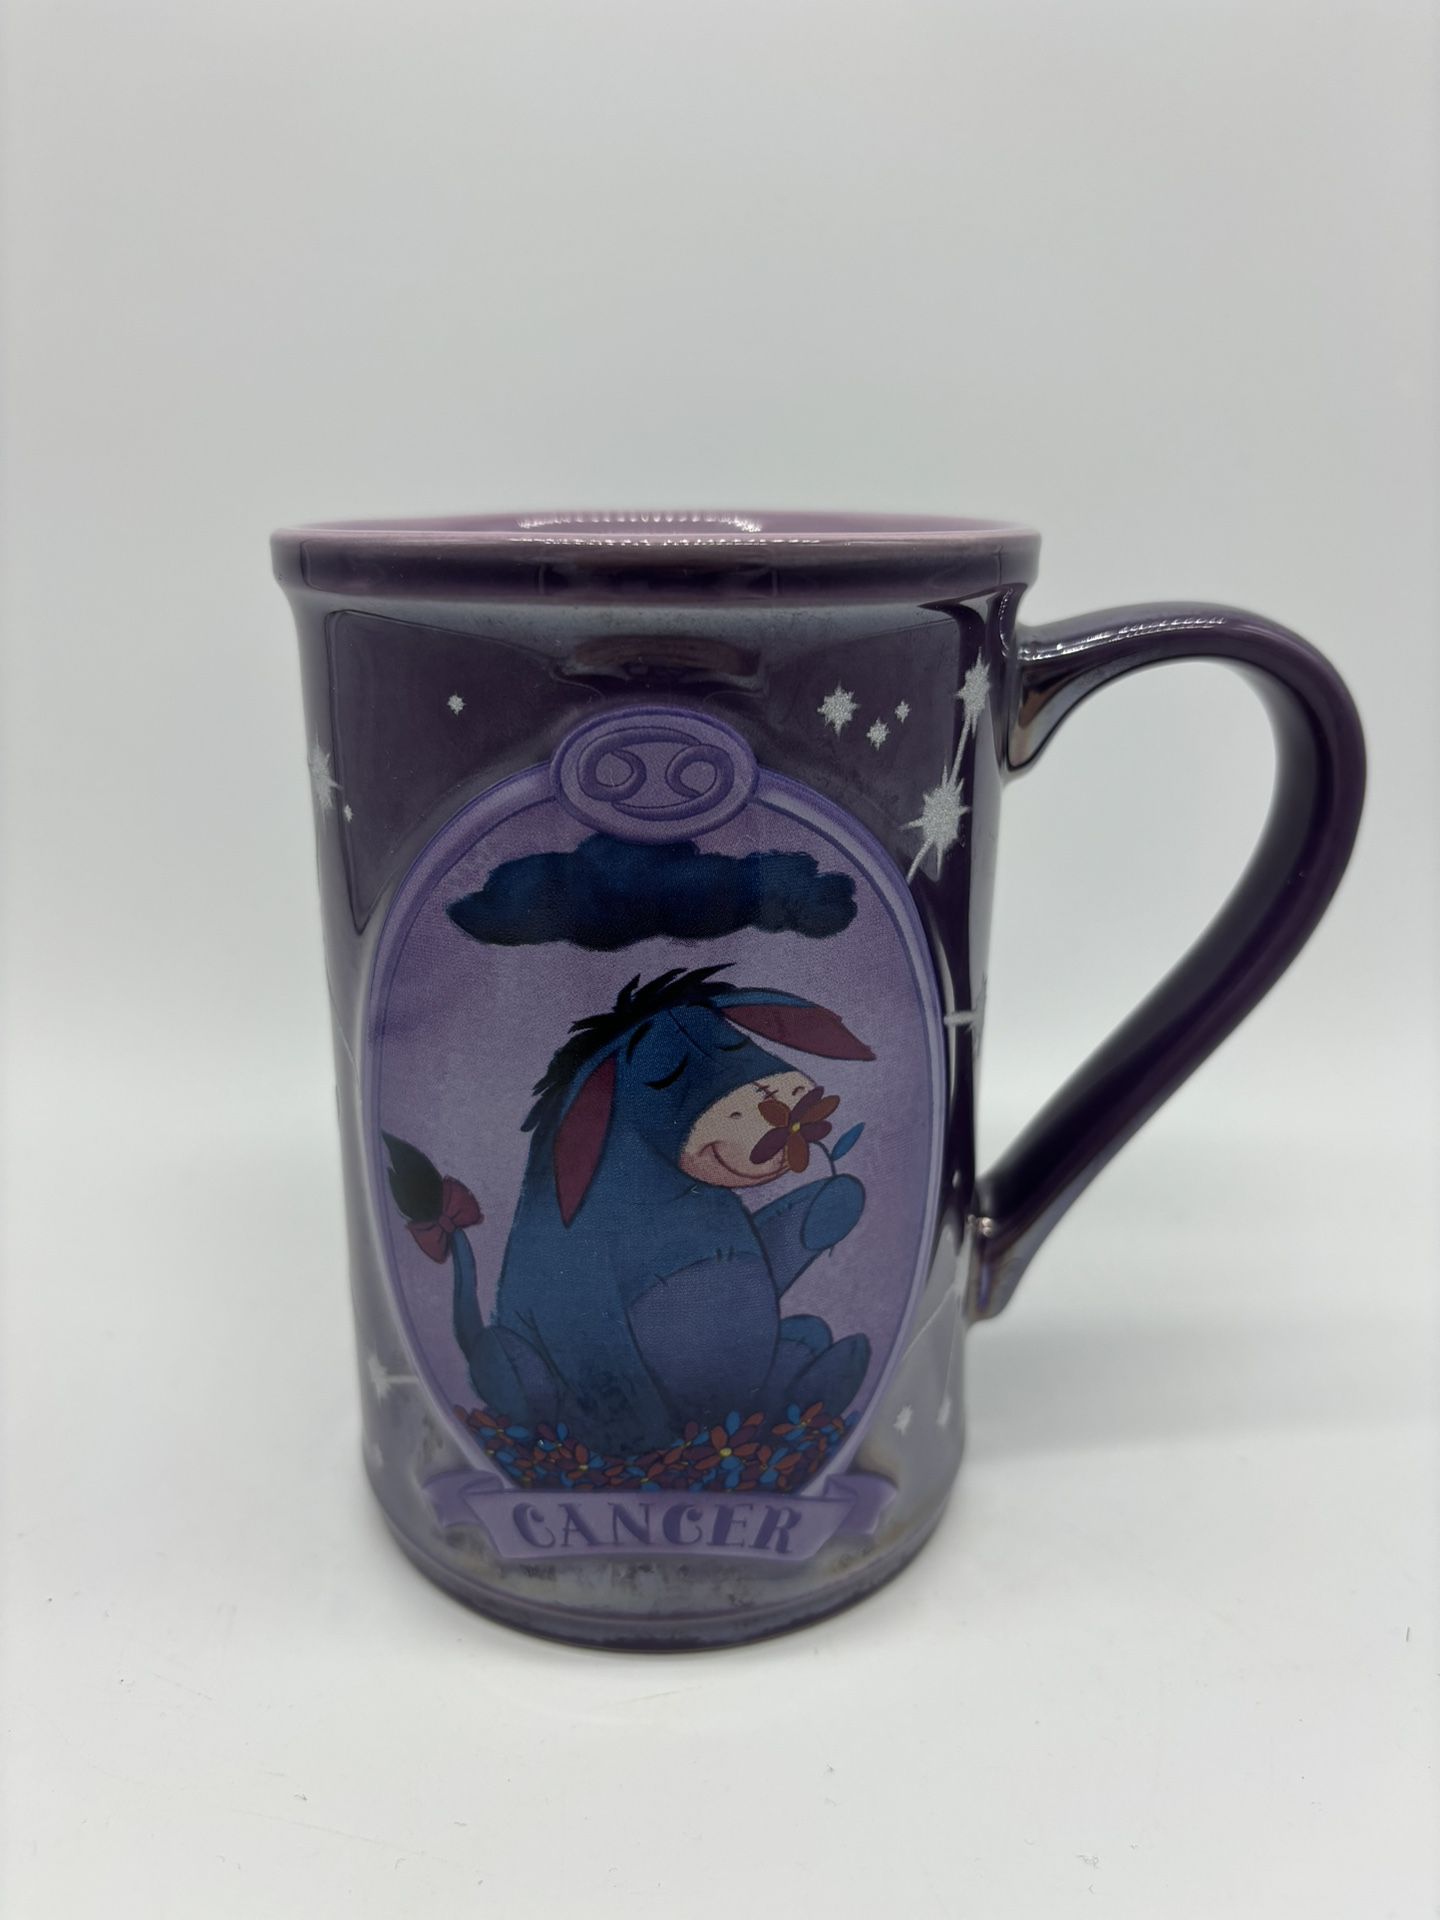 Disney Store Eeyore Ceramic Coffee Mug - Astrology Zodiac Sign Cancer - Purple